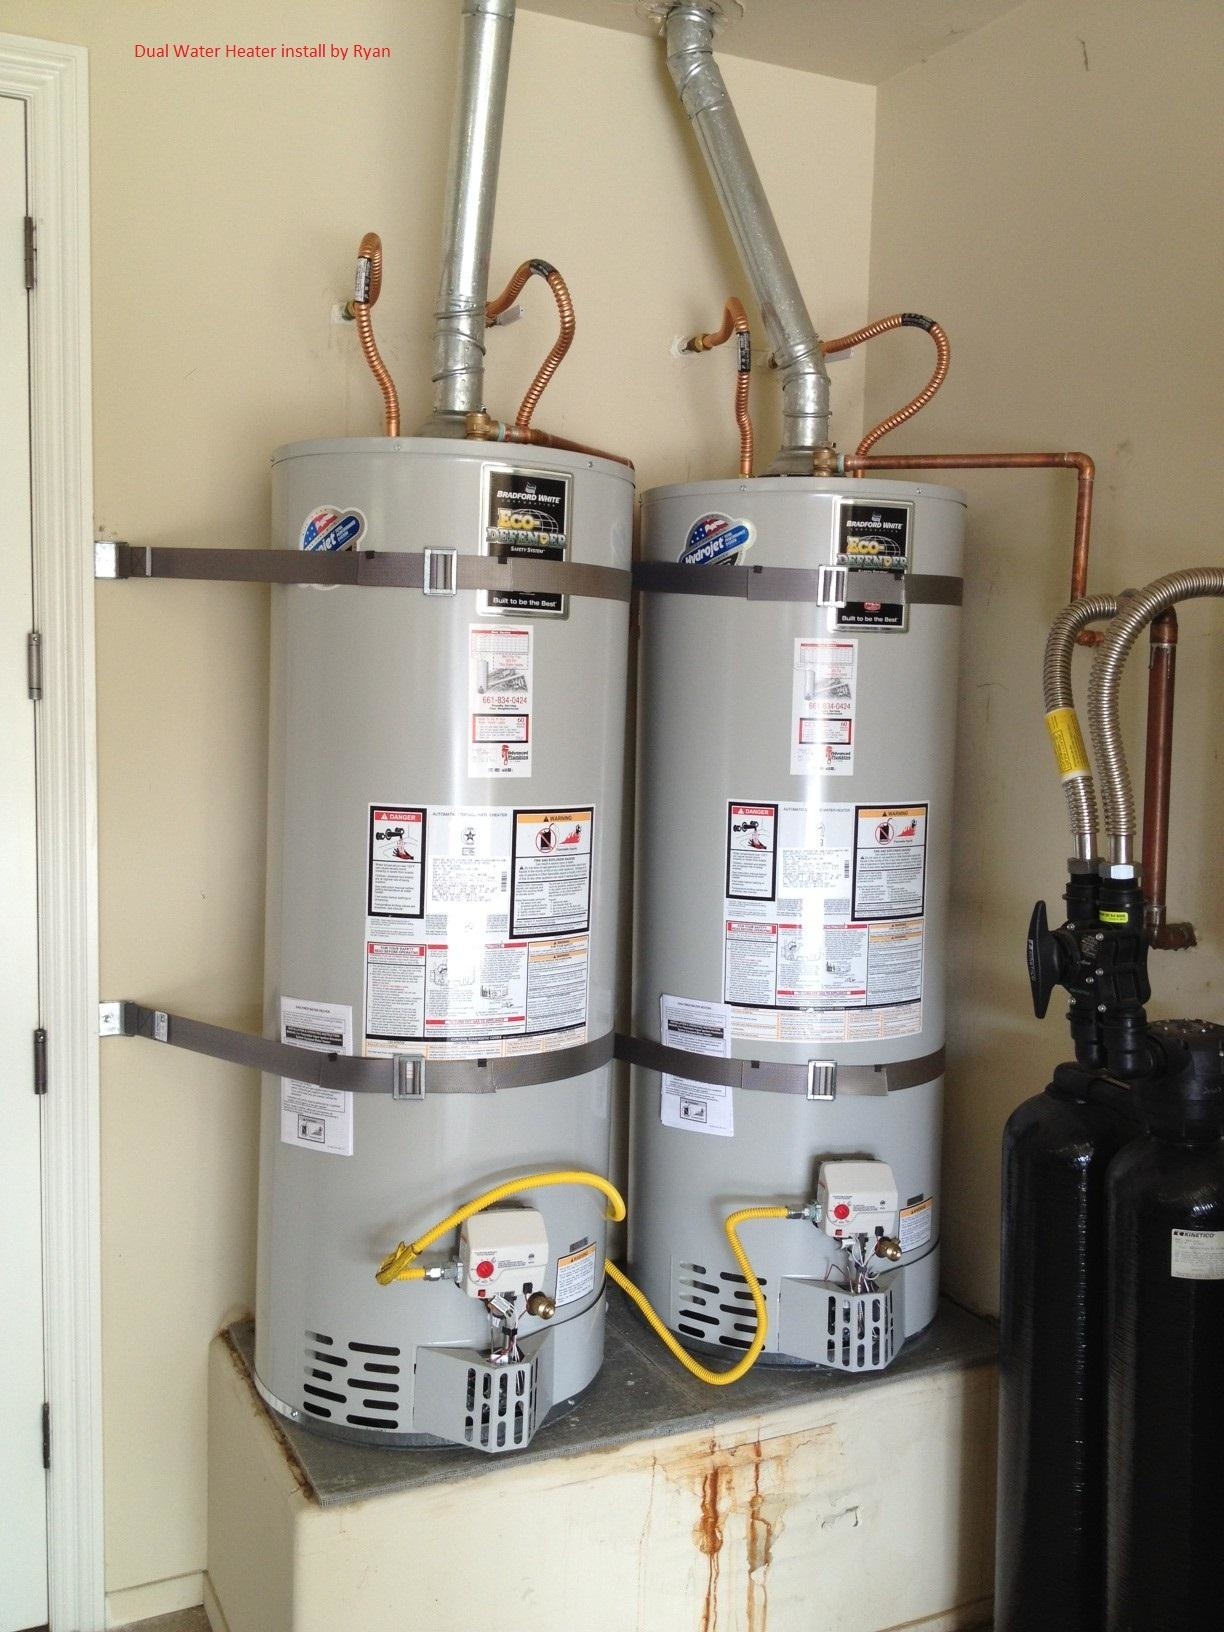 Water Heater install - dual Advanced Plumbing Service Bakersfield (661)834-0424